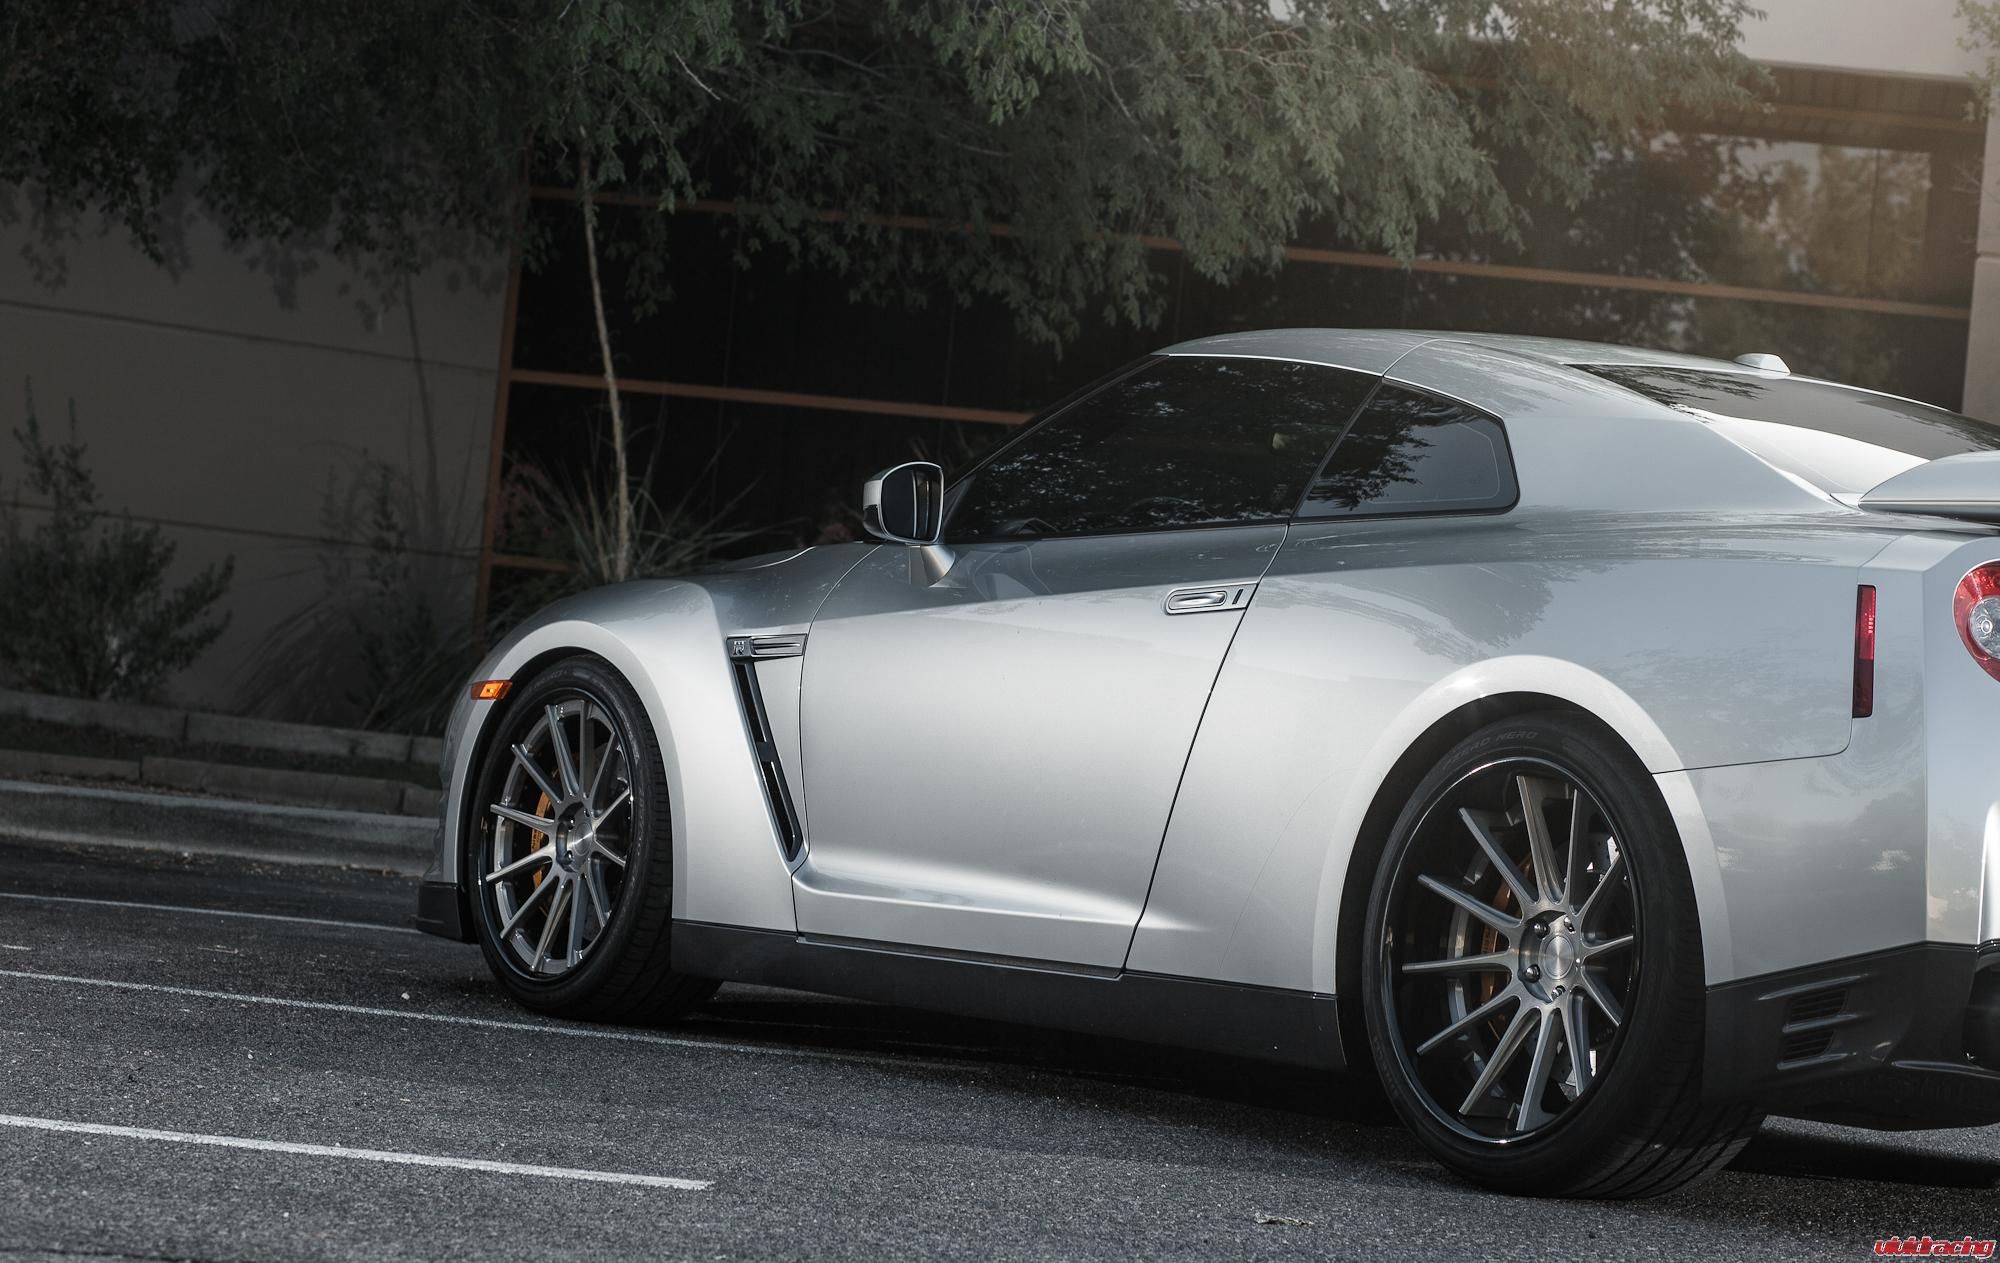 2013 Nissan GT-R by Vivid Racing